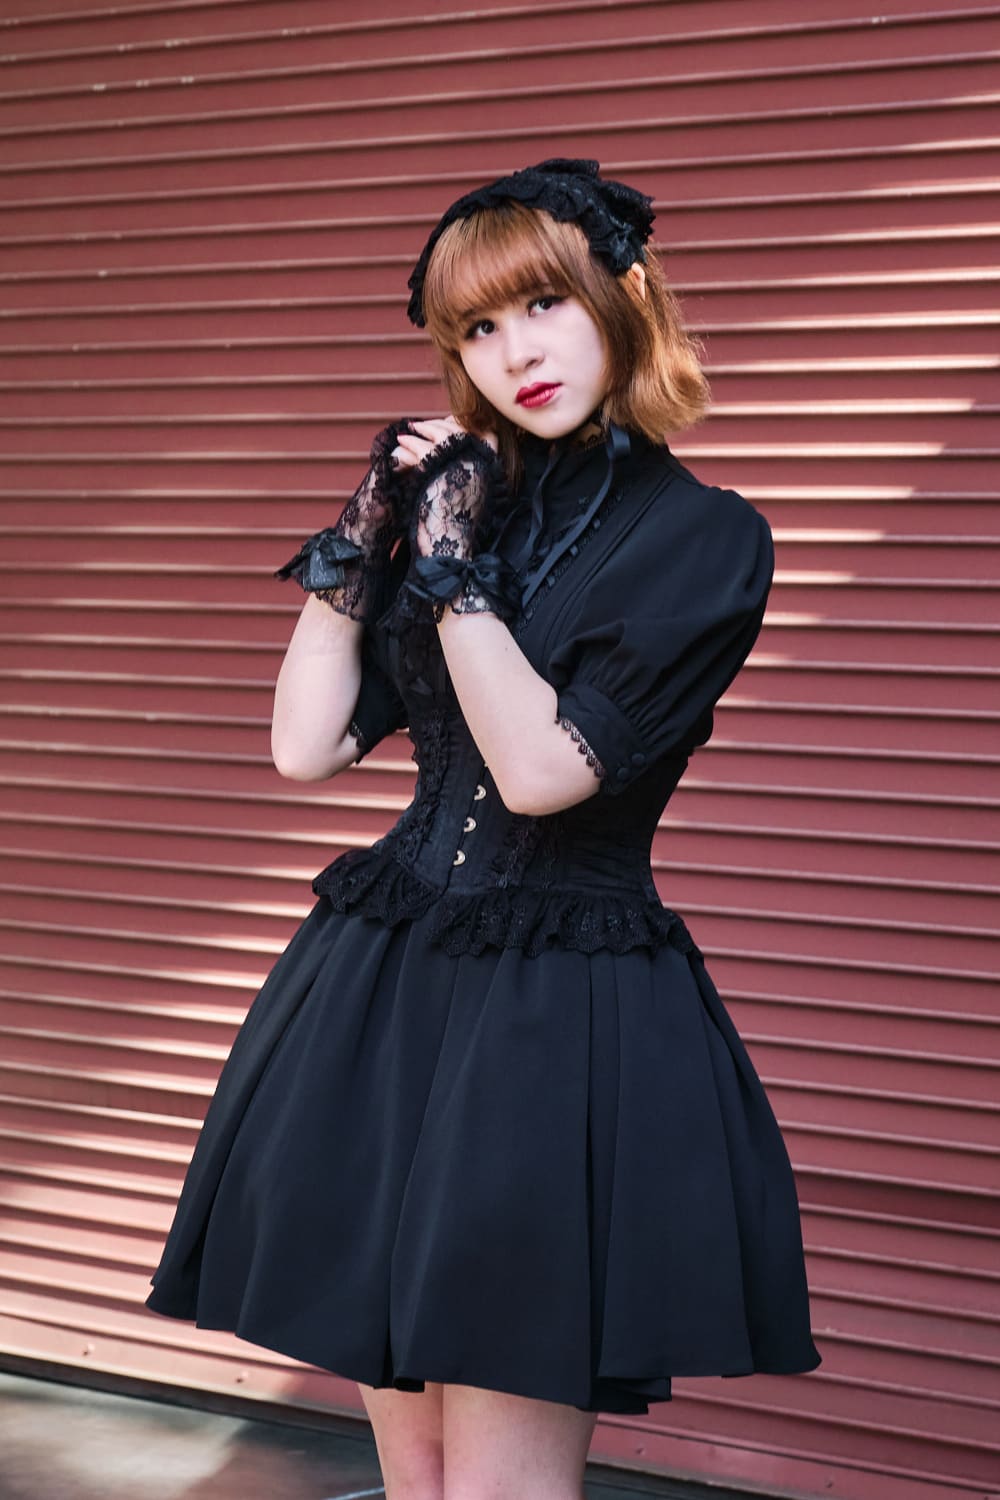 Atelier Pierrot gothic lolita model wearing all black short sleeved dress with black corset - portrait.